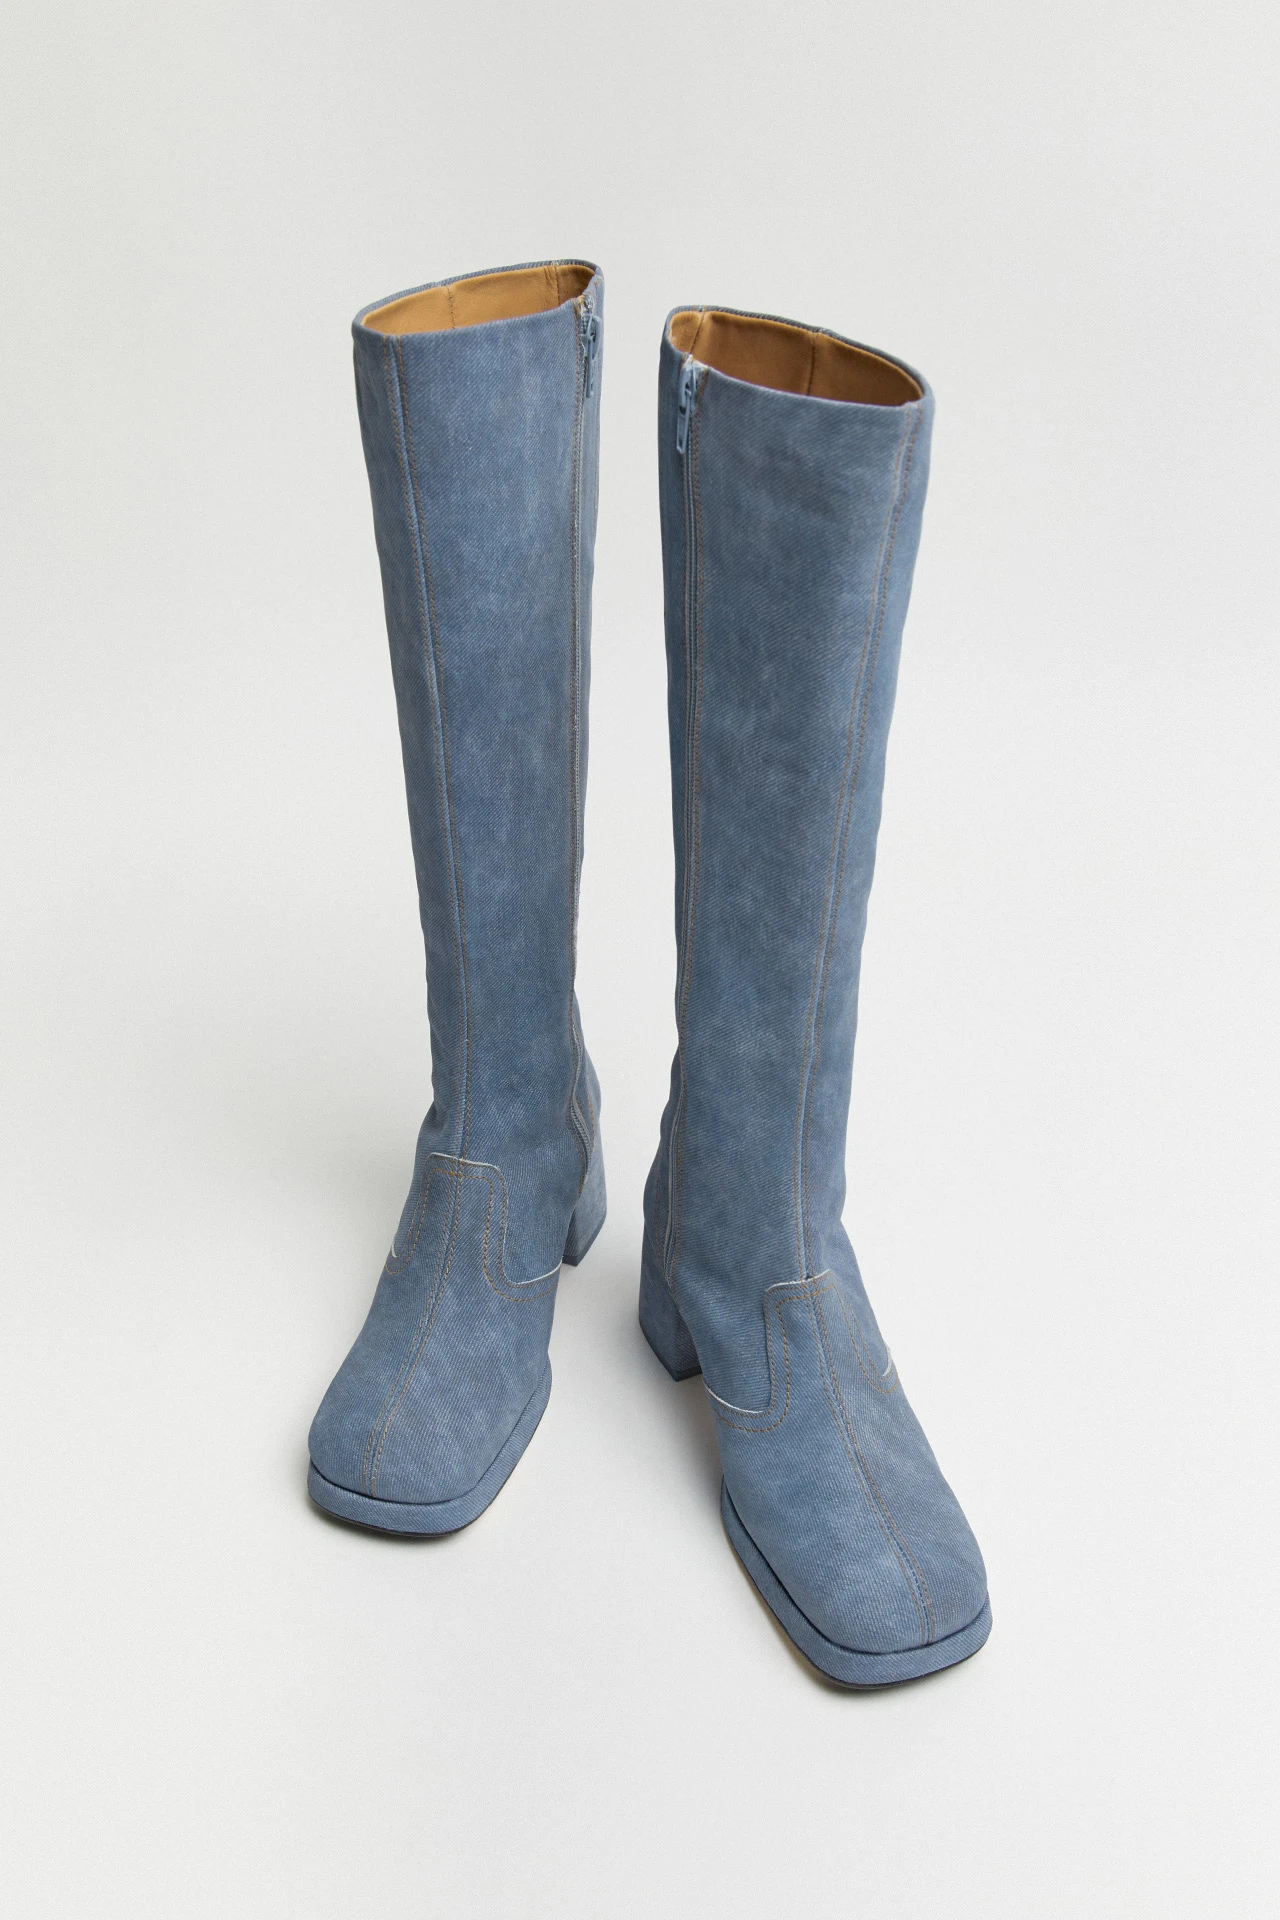 Miista-donna-denim-tall-boots-04